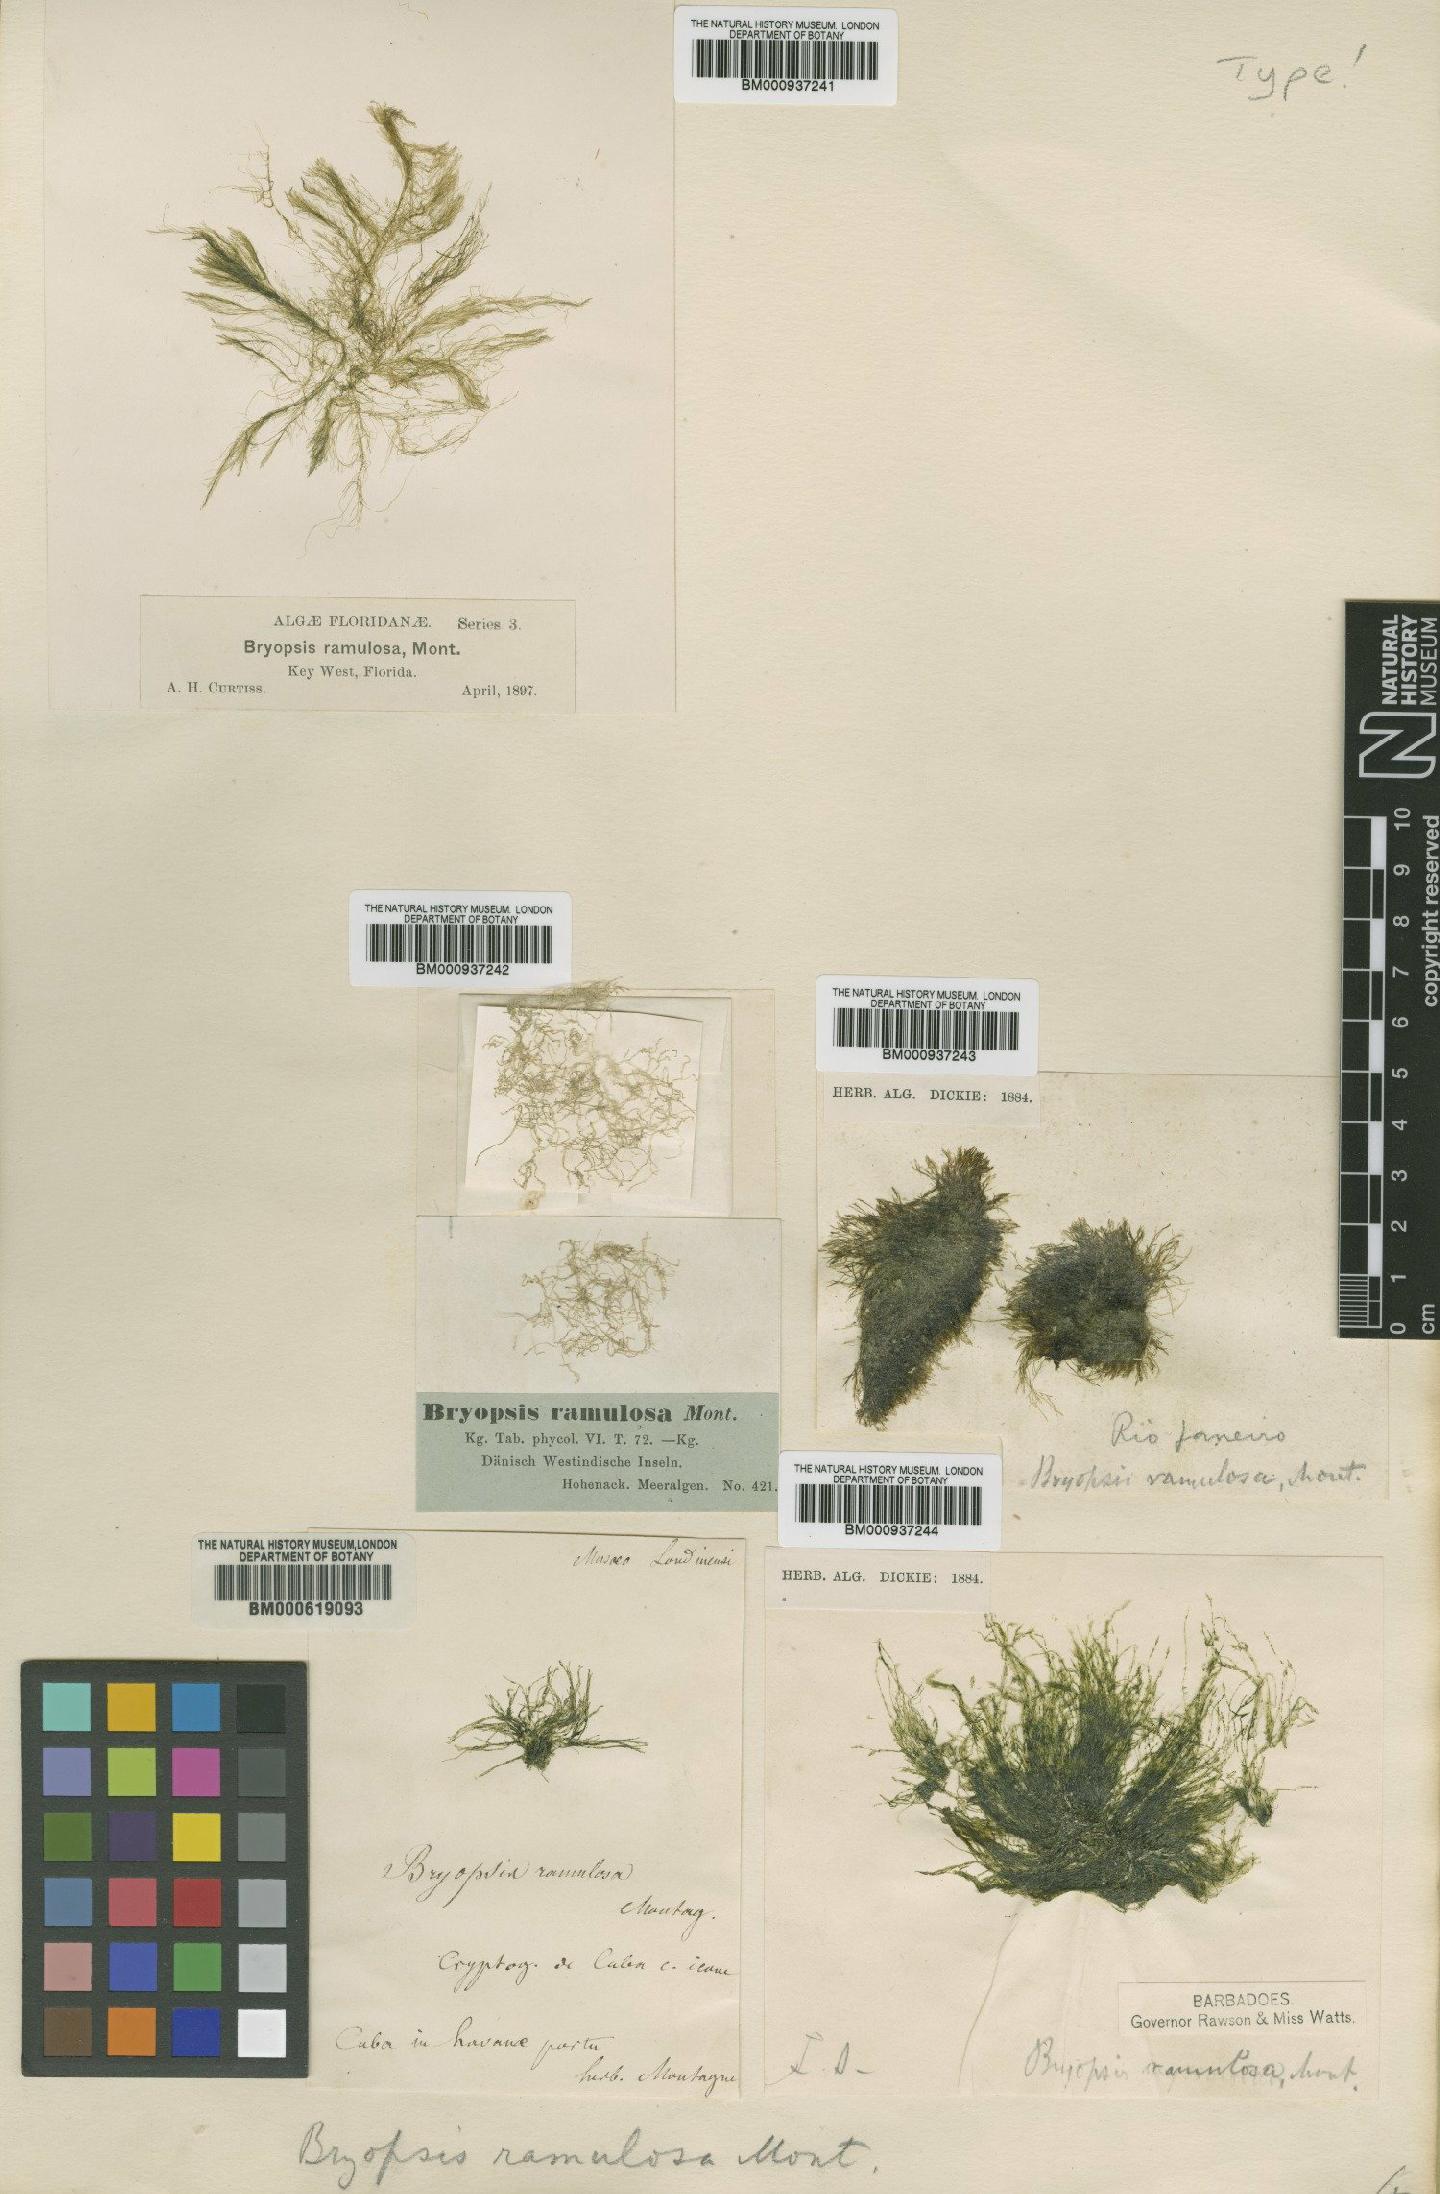 To NHMUK collection (Bryopsis ramulosa Mont.; TYPE; NHMUK:ecatalogue:474131)